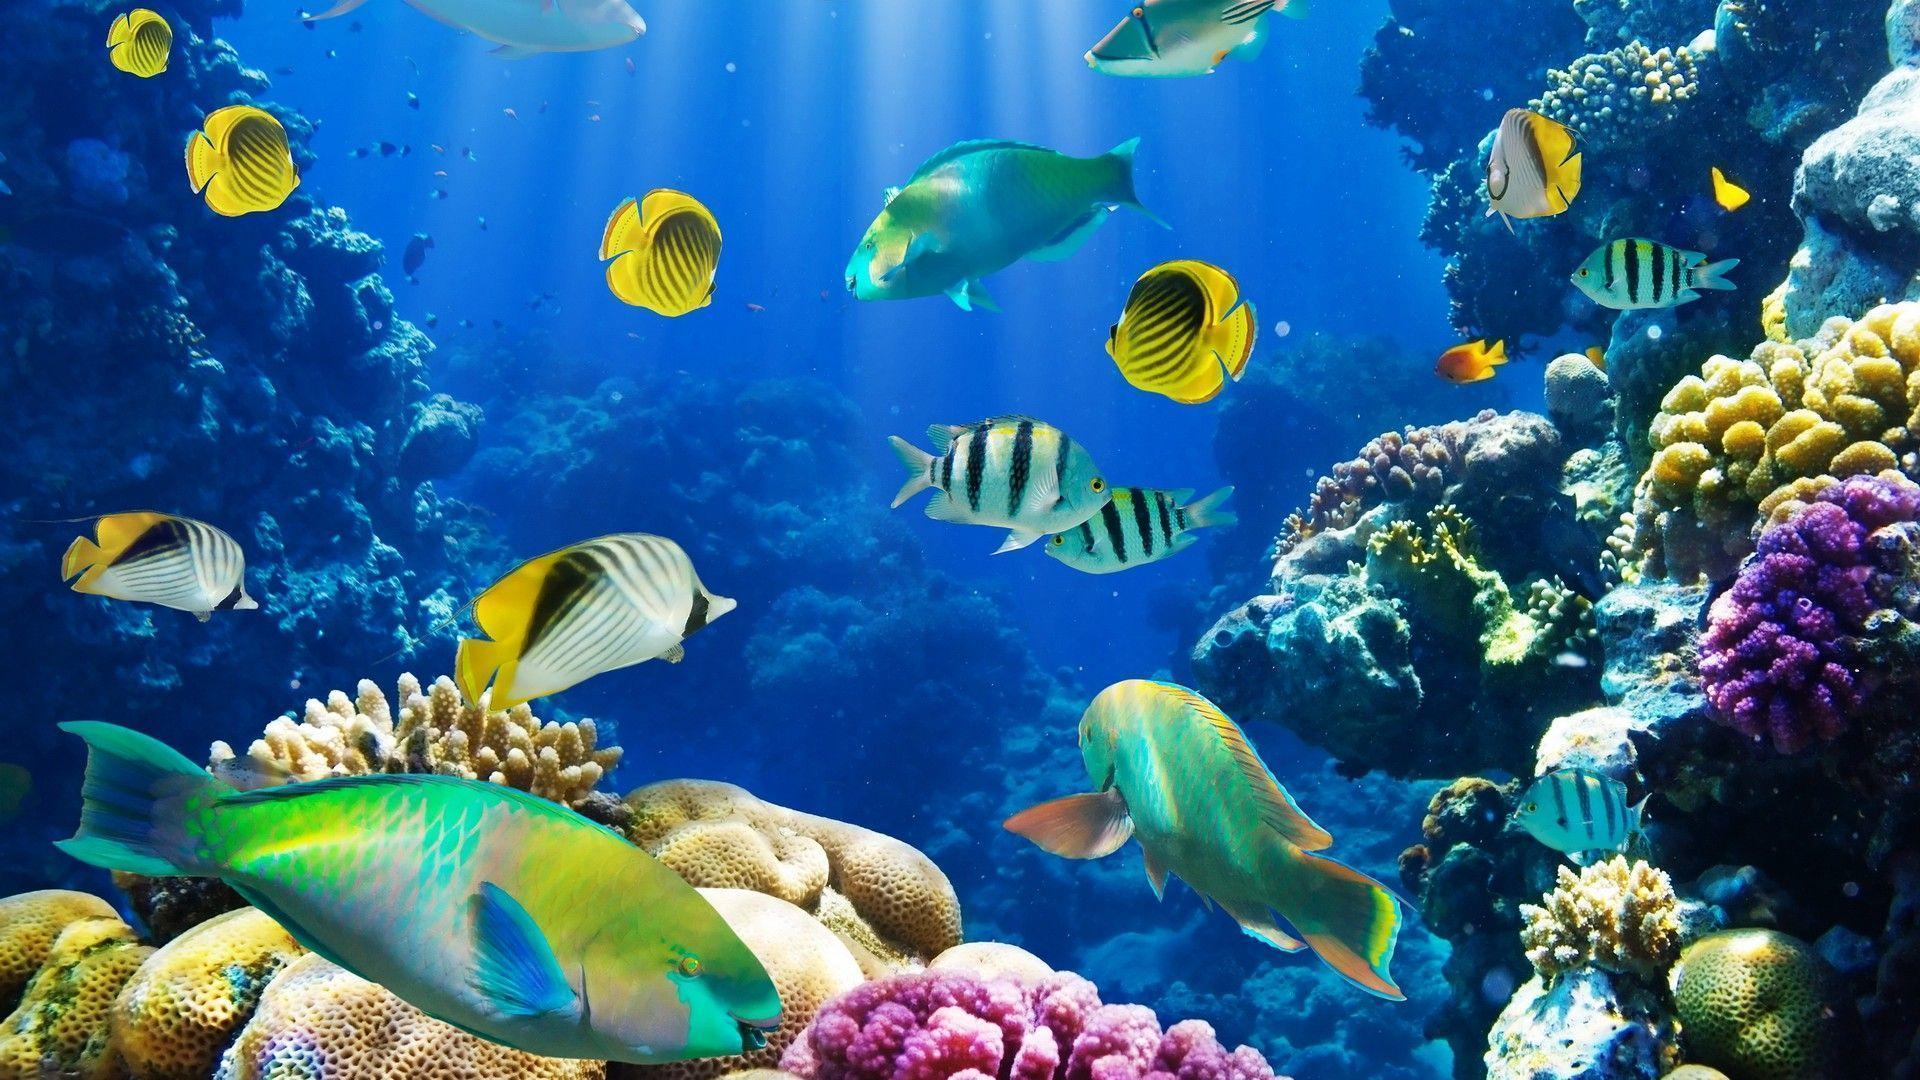 fish desktop wallpaper download Search Engine